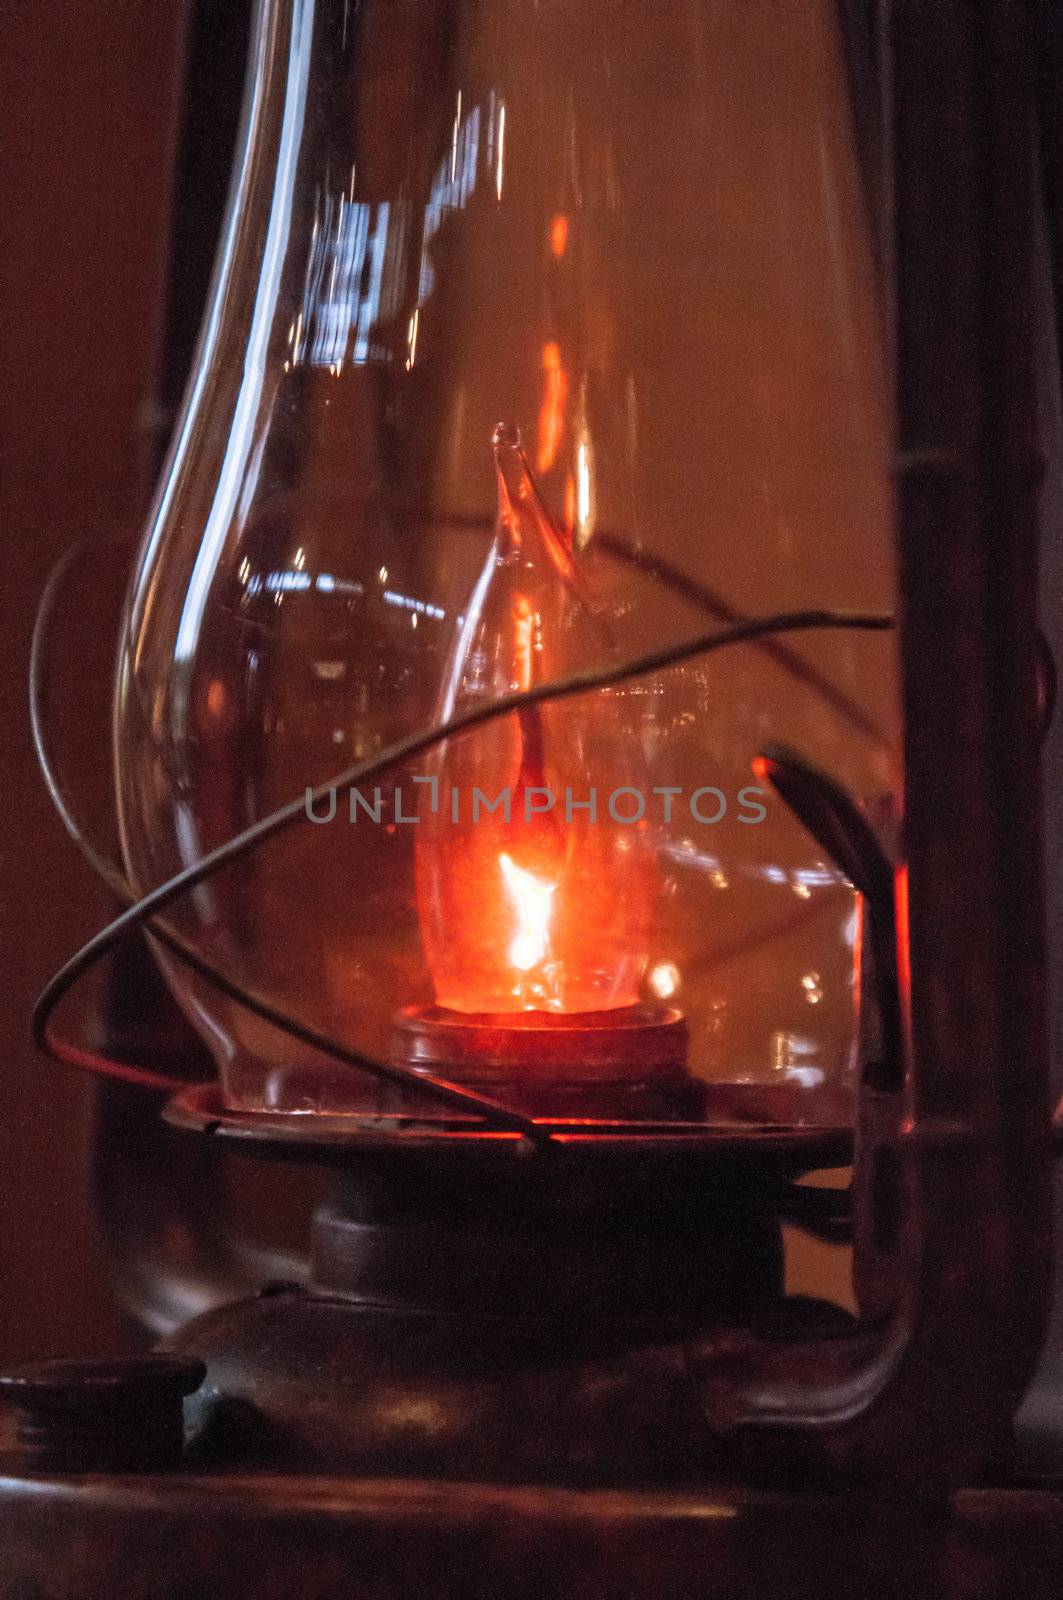 Old fashioned lantern in darkness.